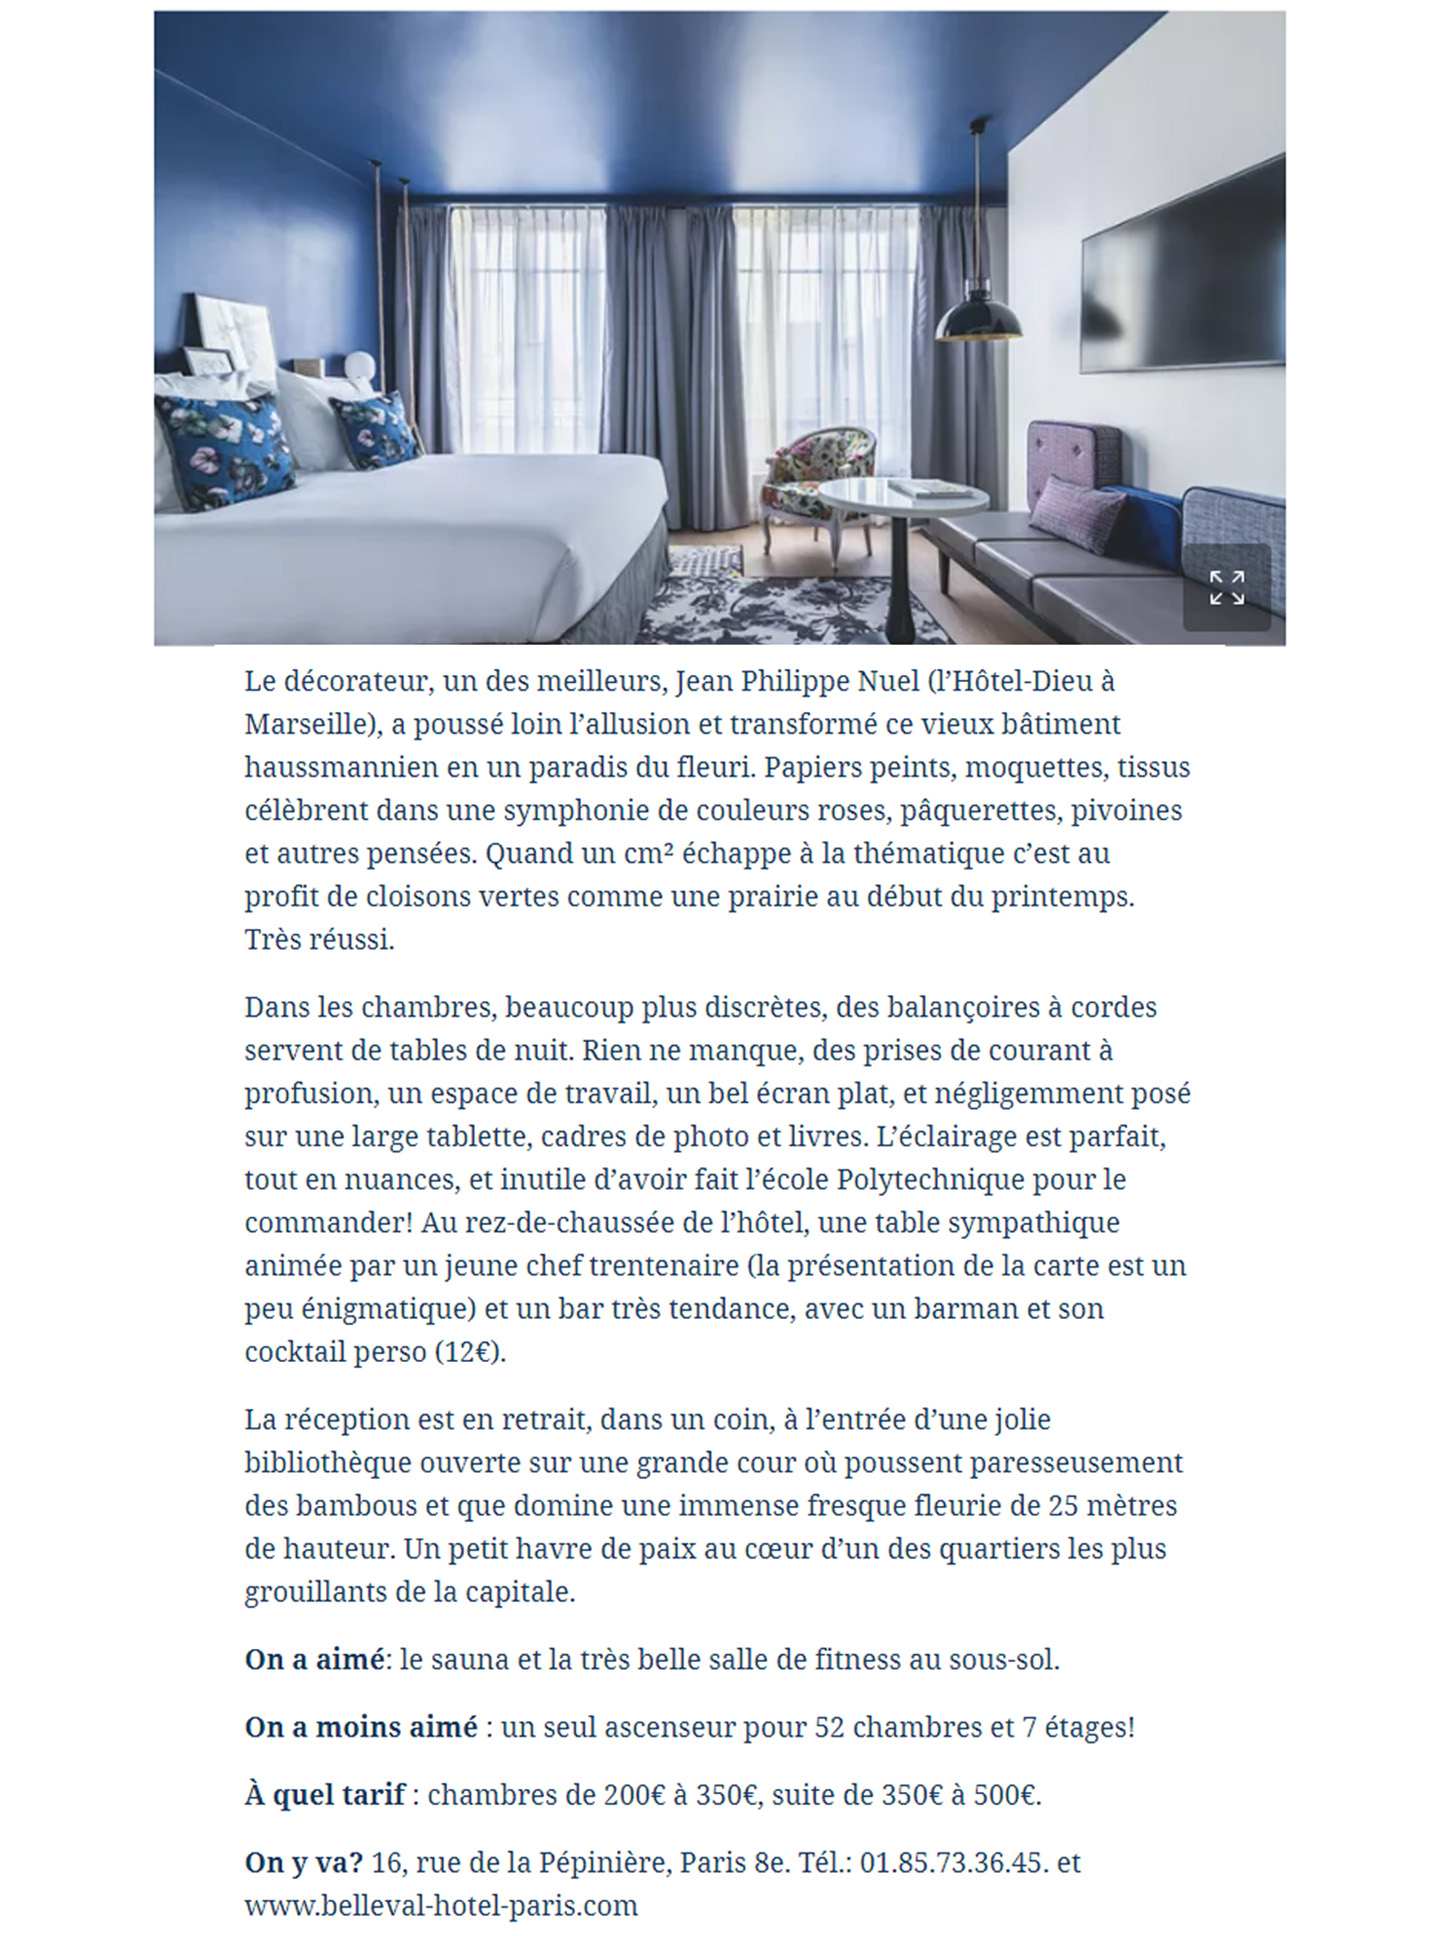 article on the belleval, parisian lifestyle hotel designed by the interior design studio jean-philippe nuel in the magazine le Figaro